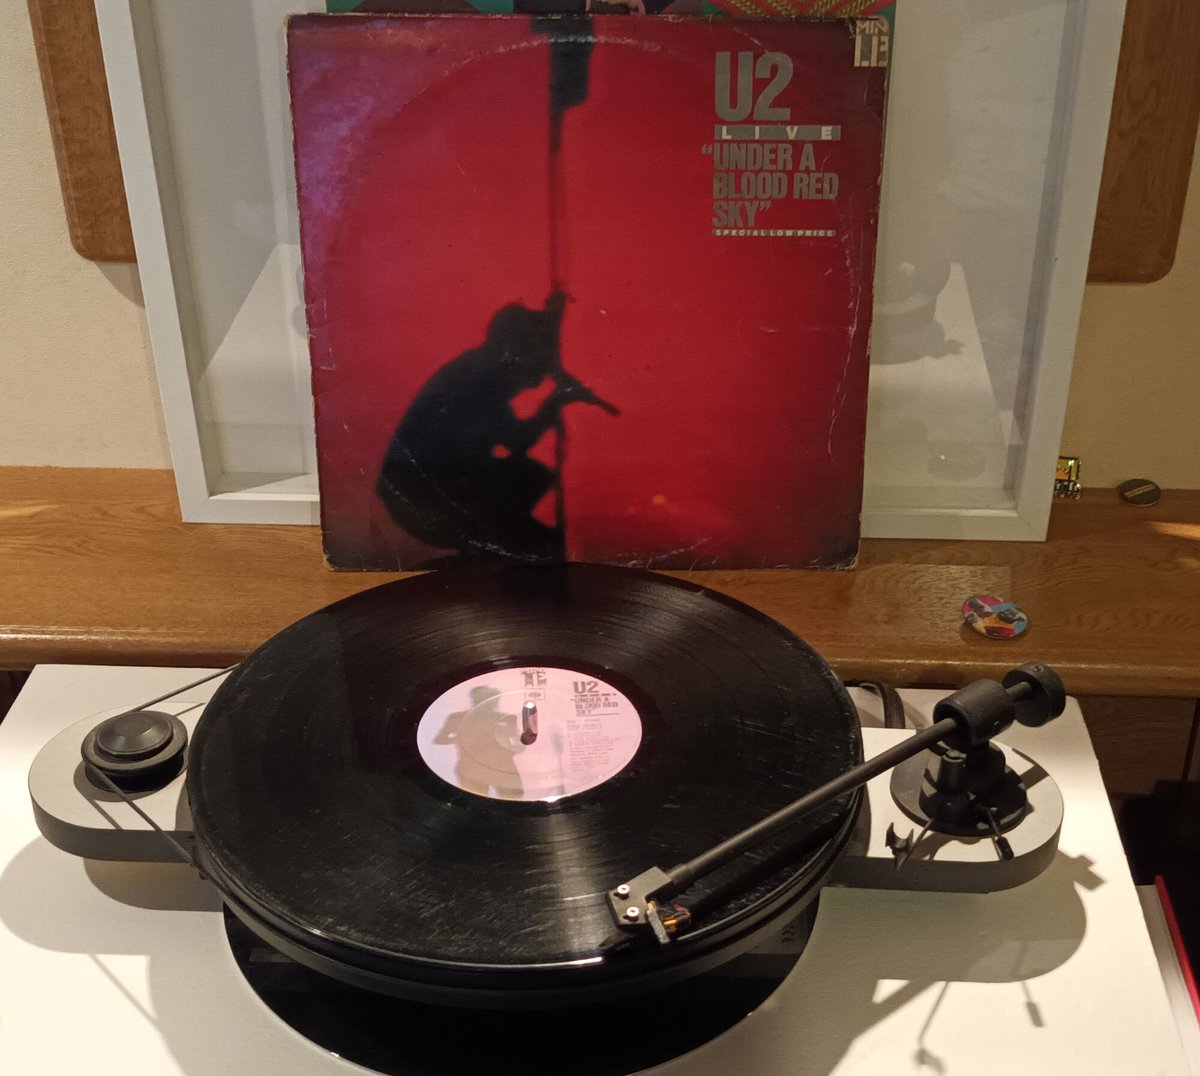 #AlbumQuestJan #19
#1stAlbumBoughtWithOwnMoney
#vinyl #vinylrecords 👇
though initial purchase on tape .. 😁
#AlbumClosingSongs 
#5Albums83 #38
U2 - Under A Blood Red Sky
Track - 40
youtu.be/3W7Zyrmiw0c